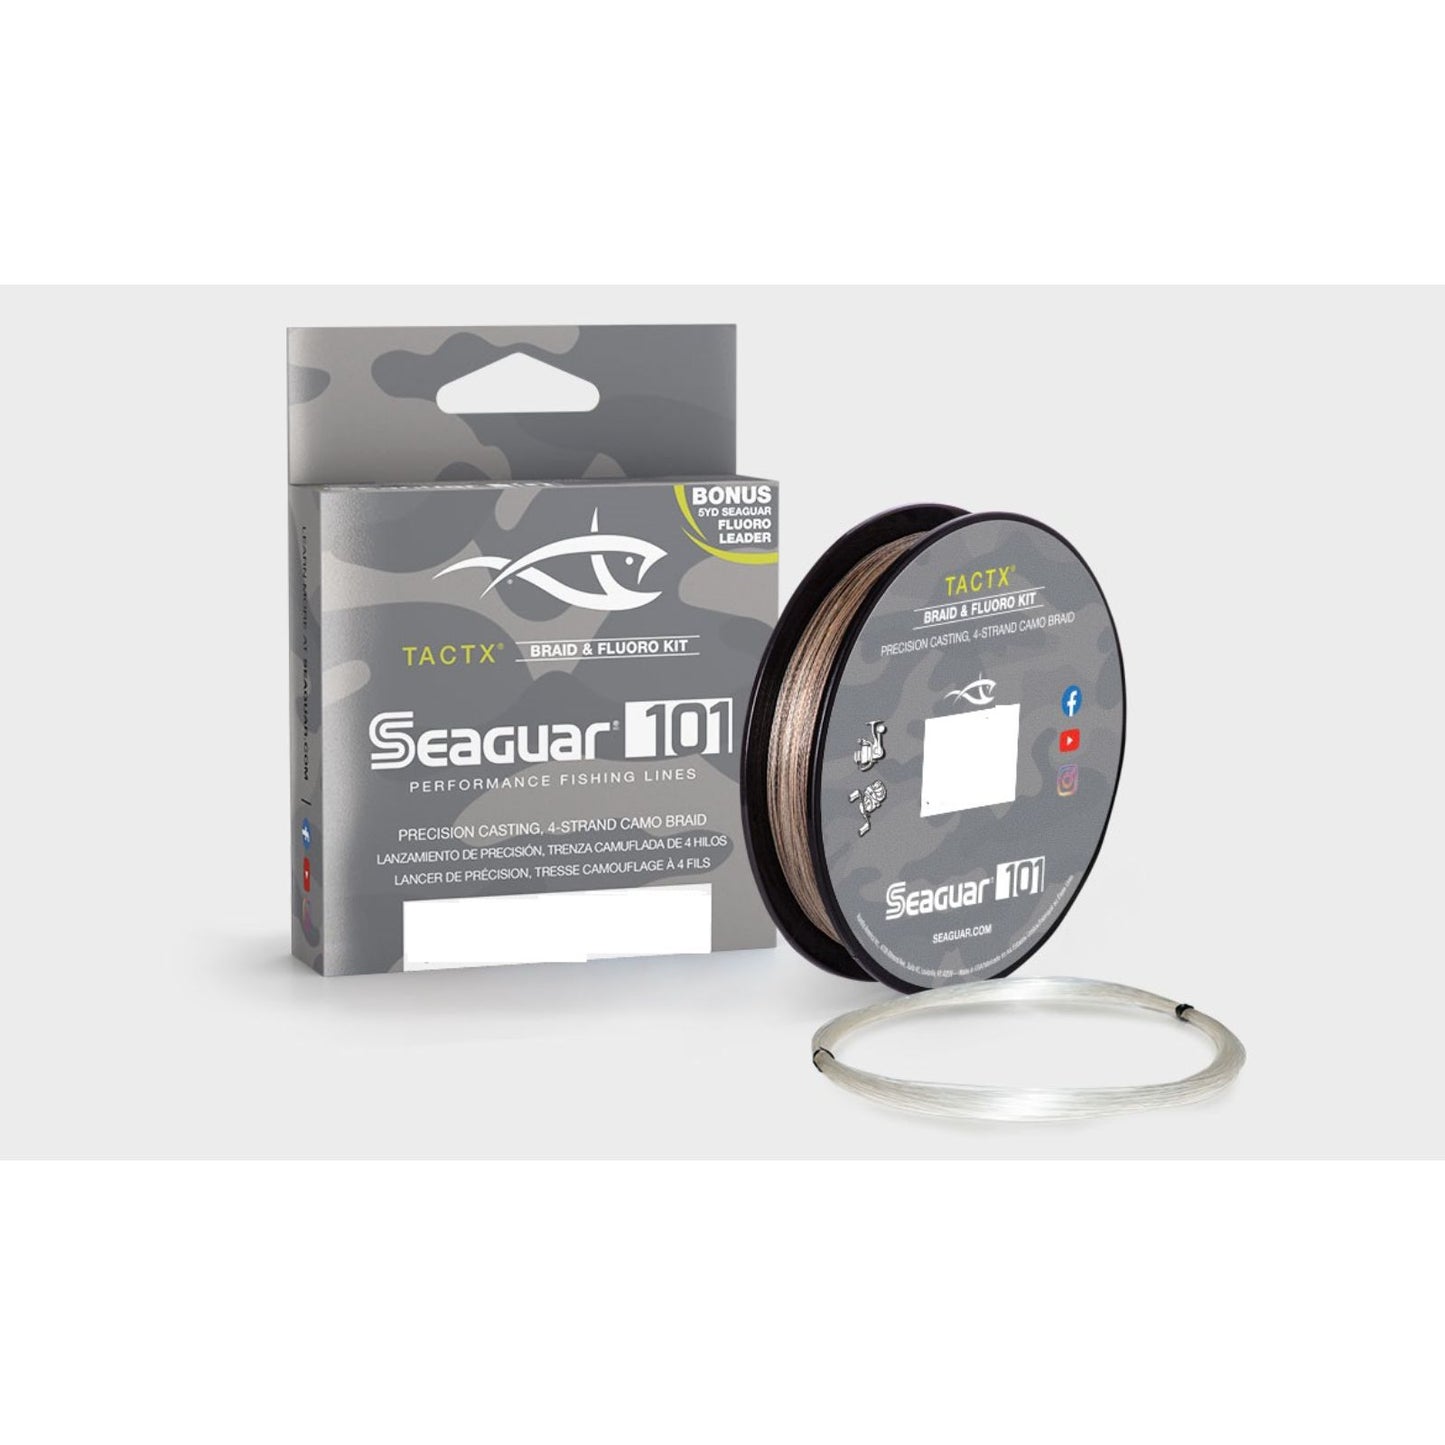 Seaguar 101 TactX 65TCX300 Braid w Fluoro Leader 300 Yds